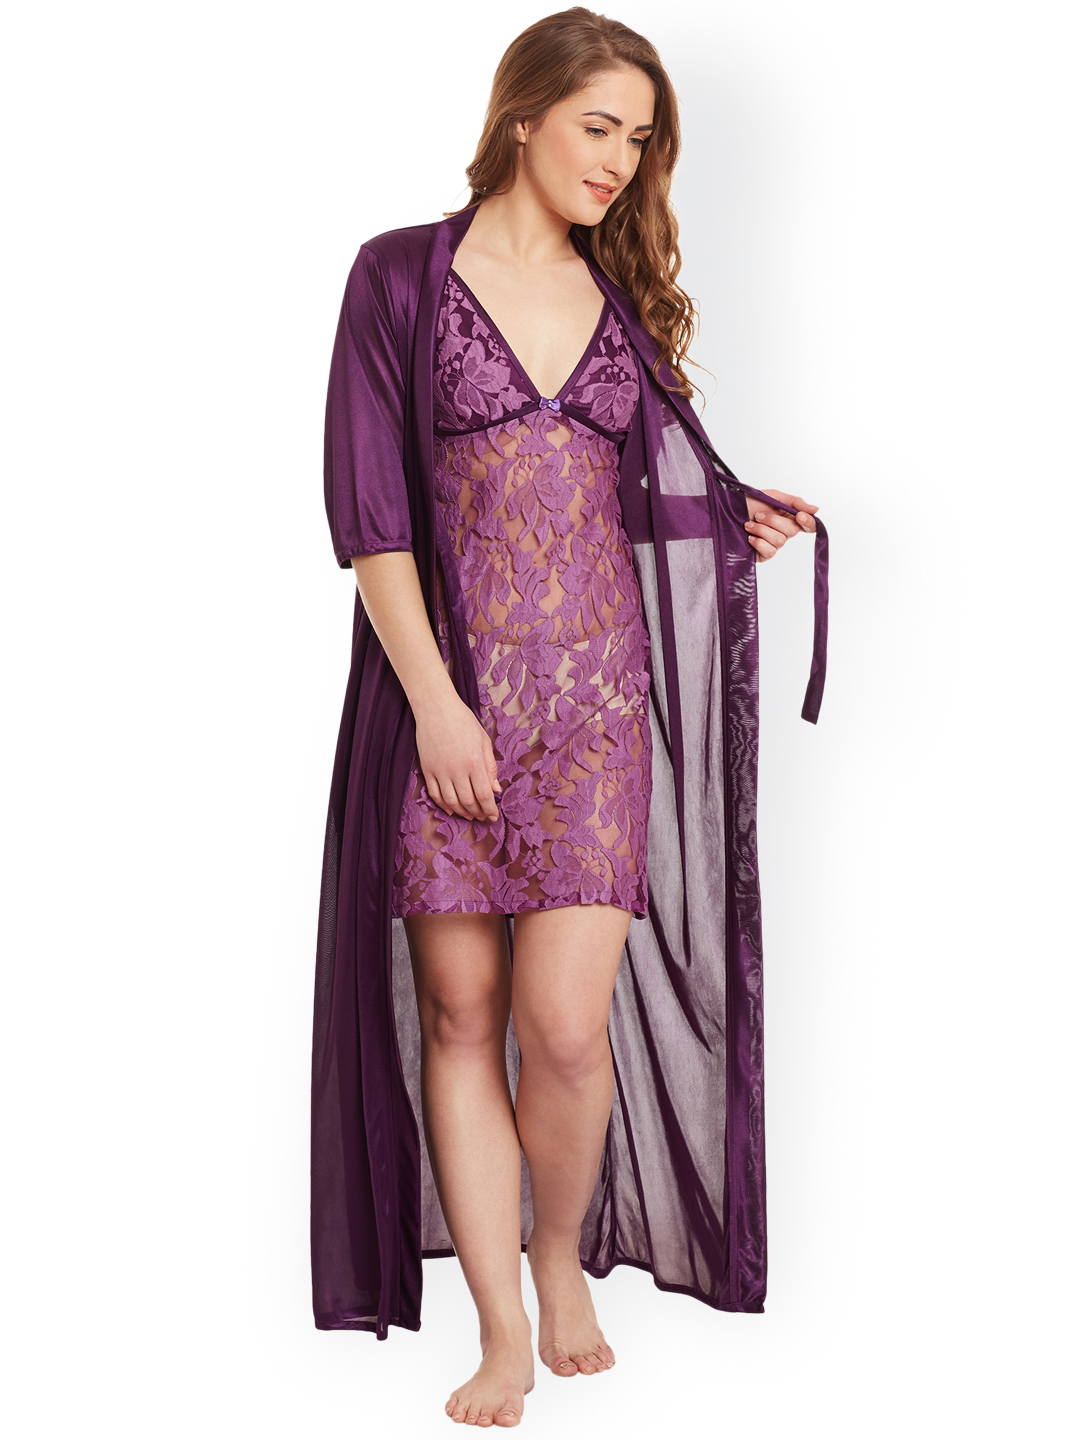 Claura Purple Lace Satin Nightdress with Robe - Night Dress